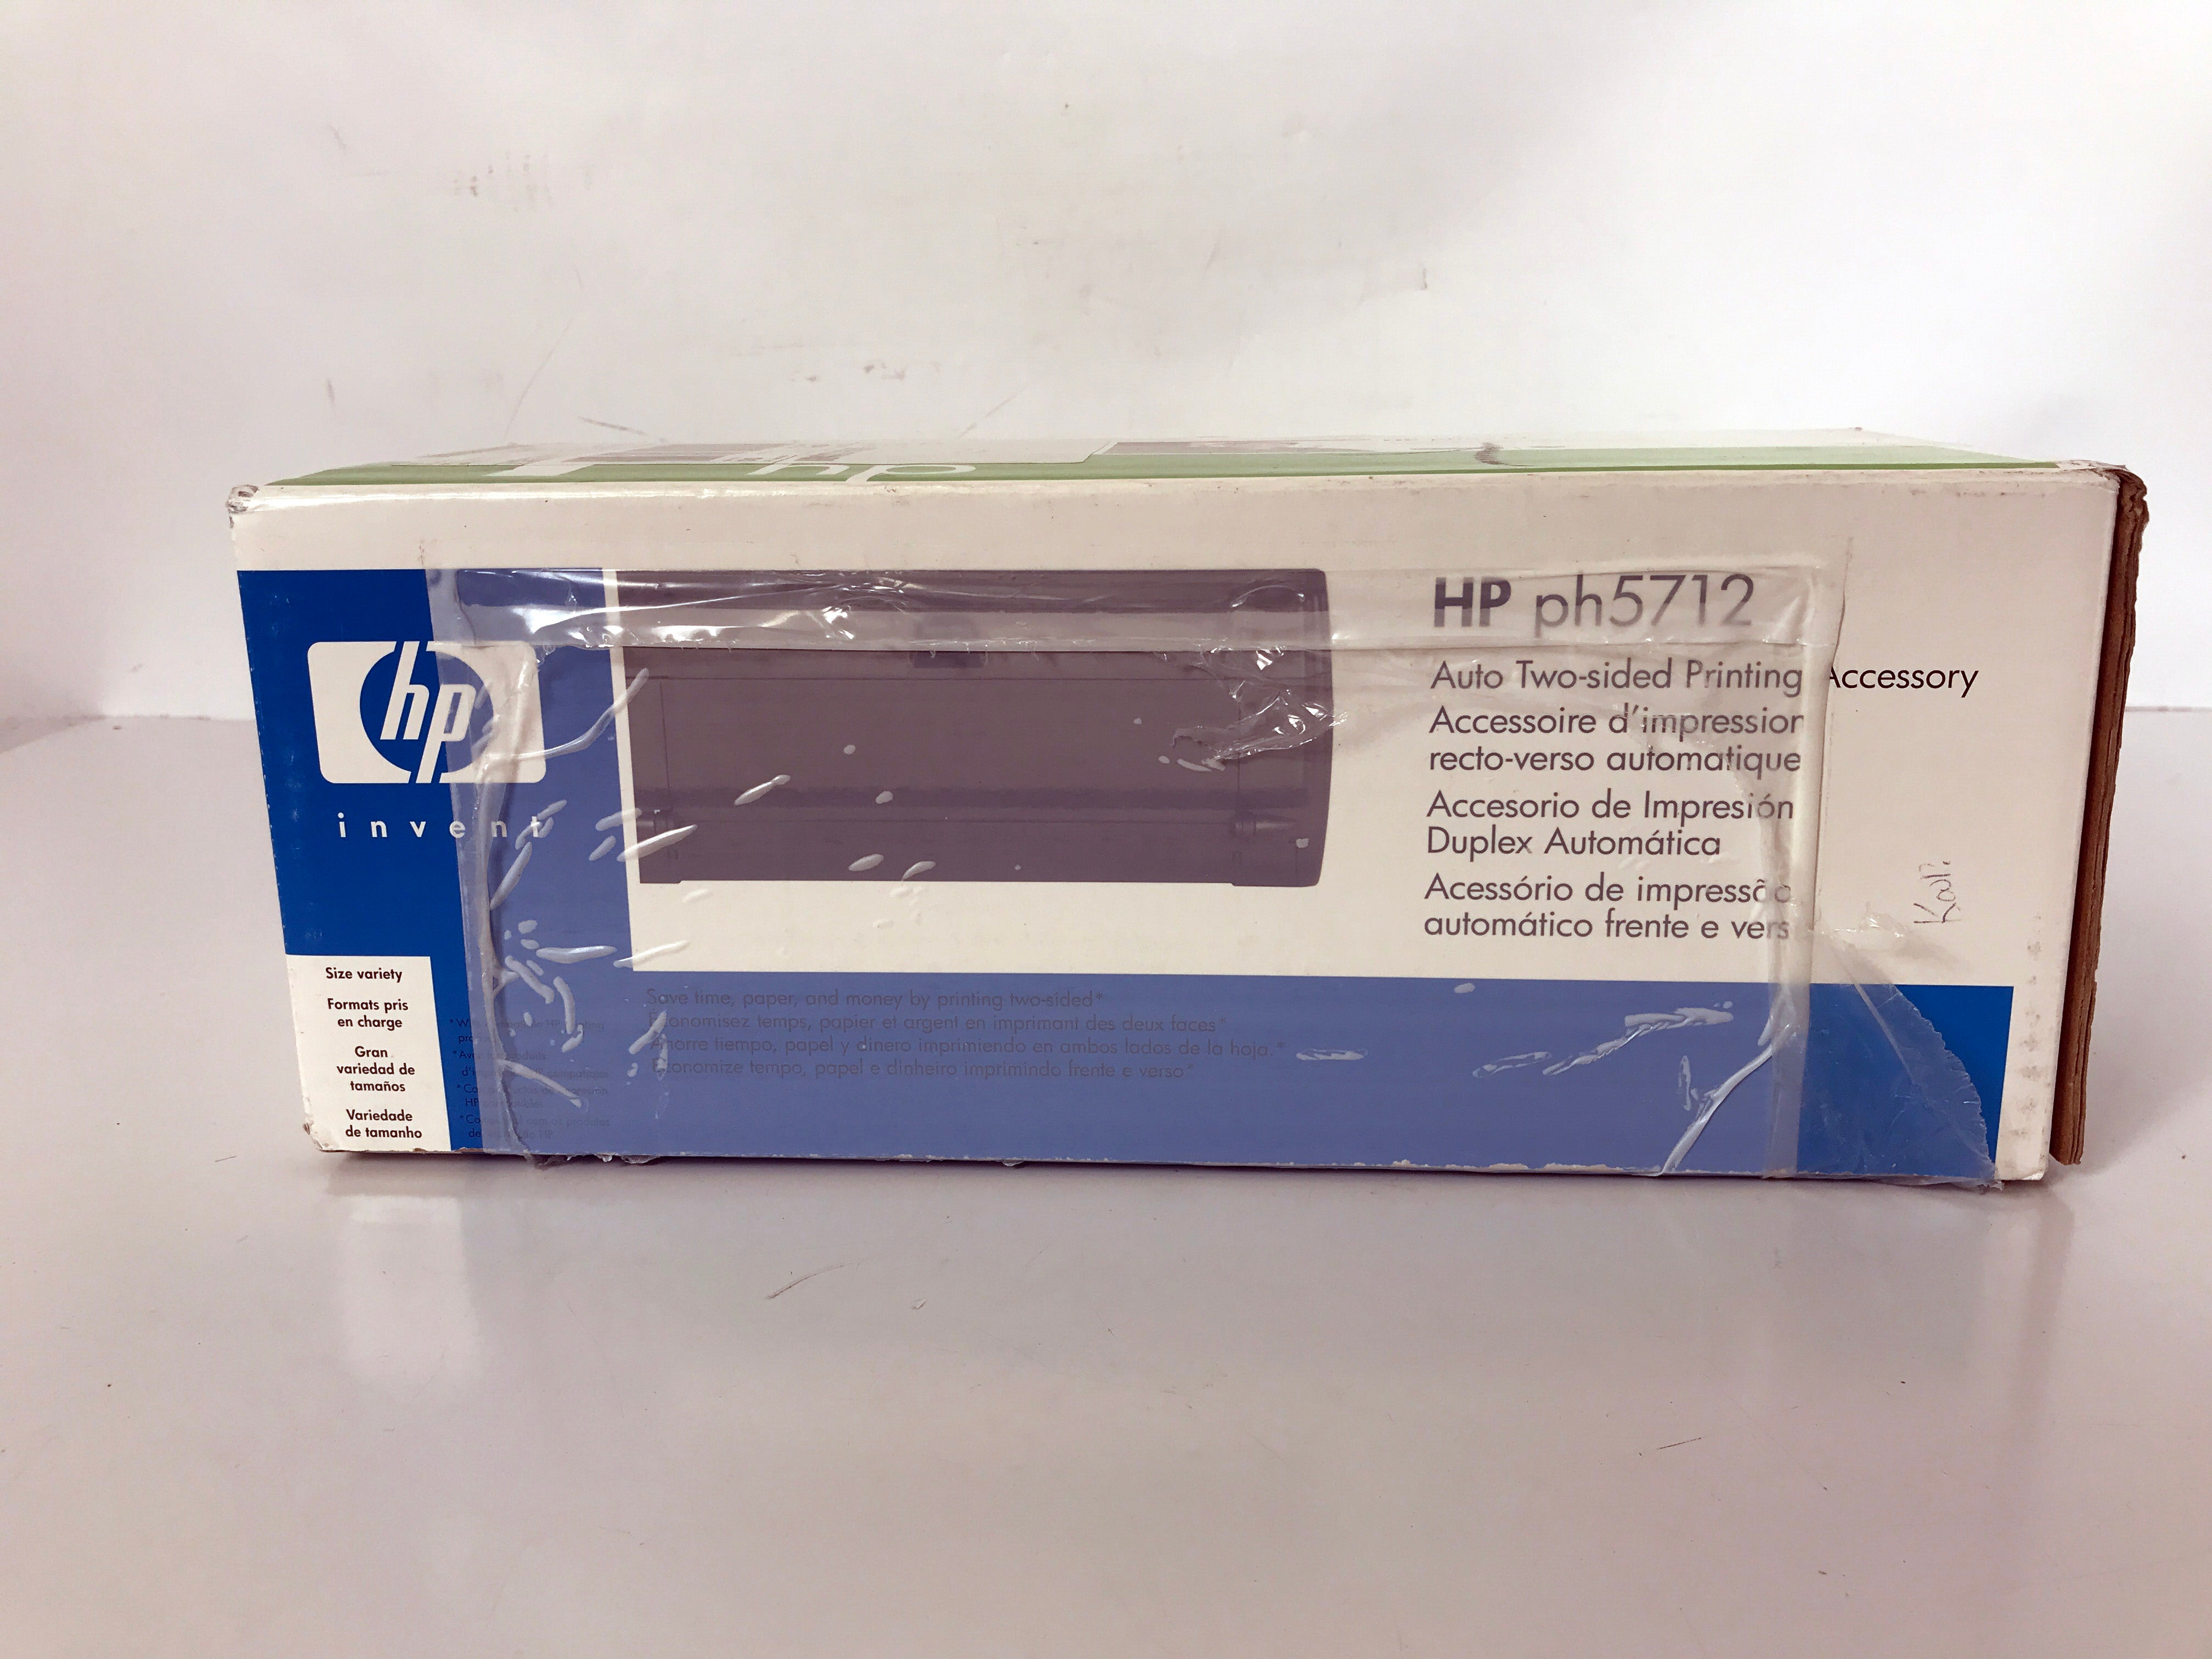 HP PH5712 Auto Duplexer Printing Accessory